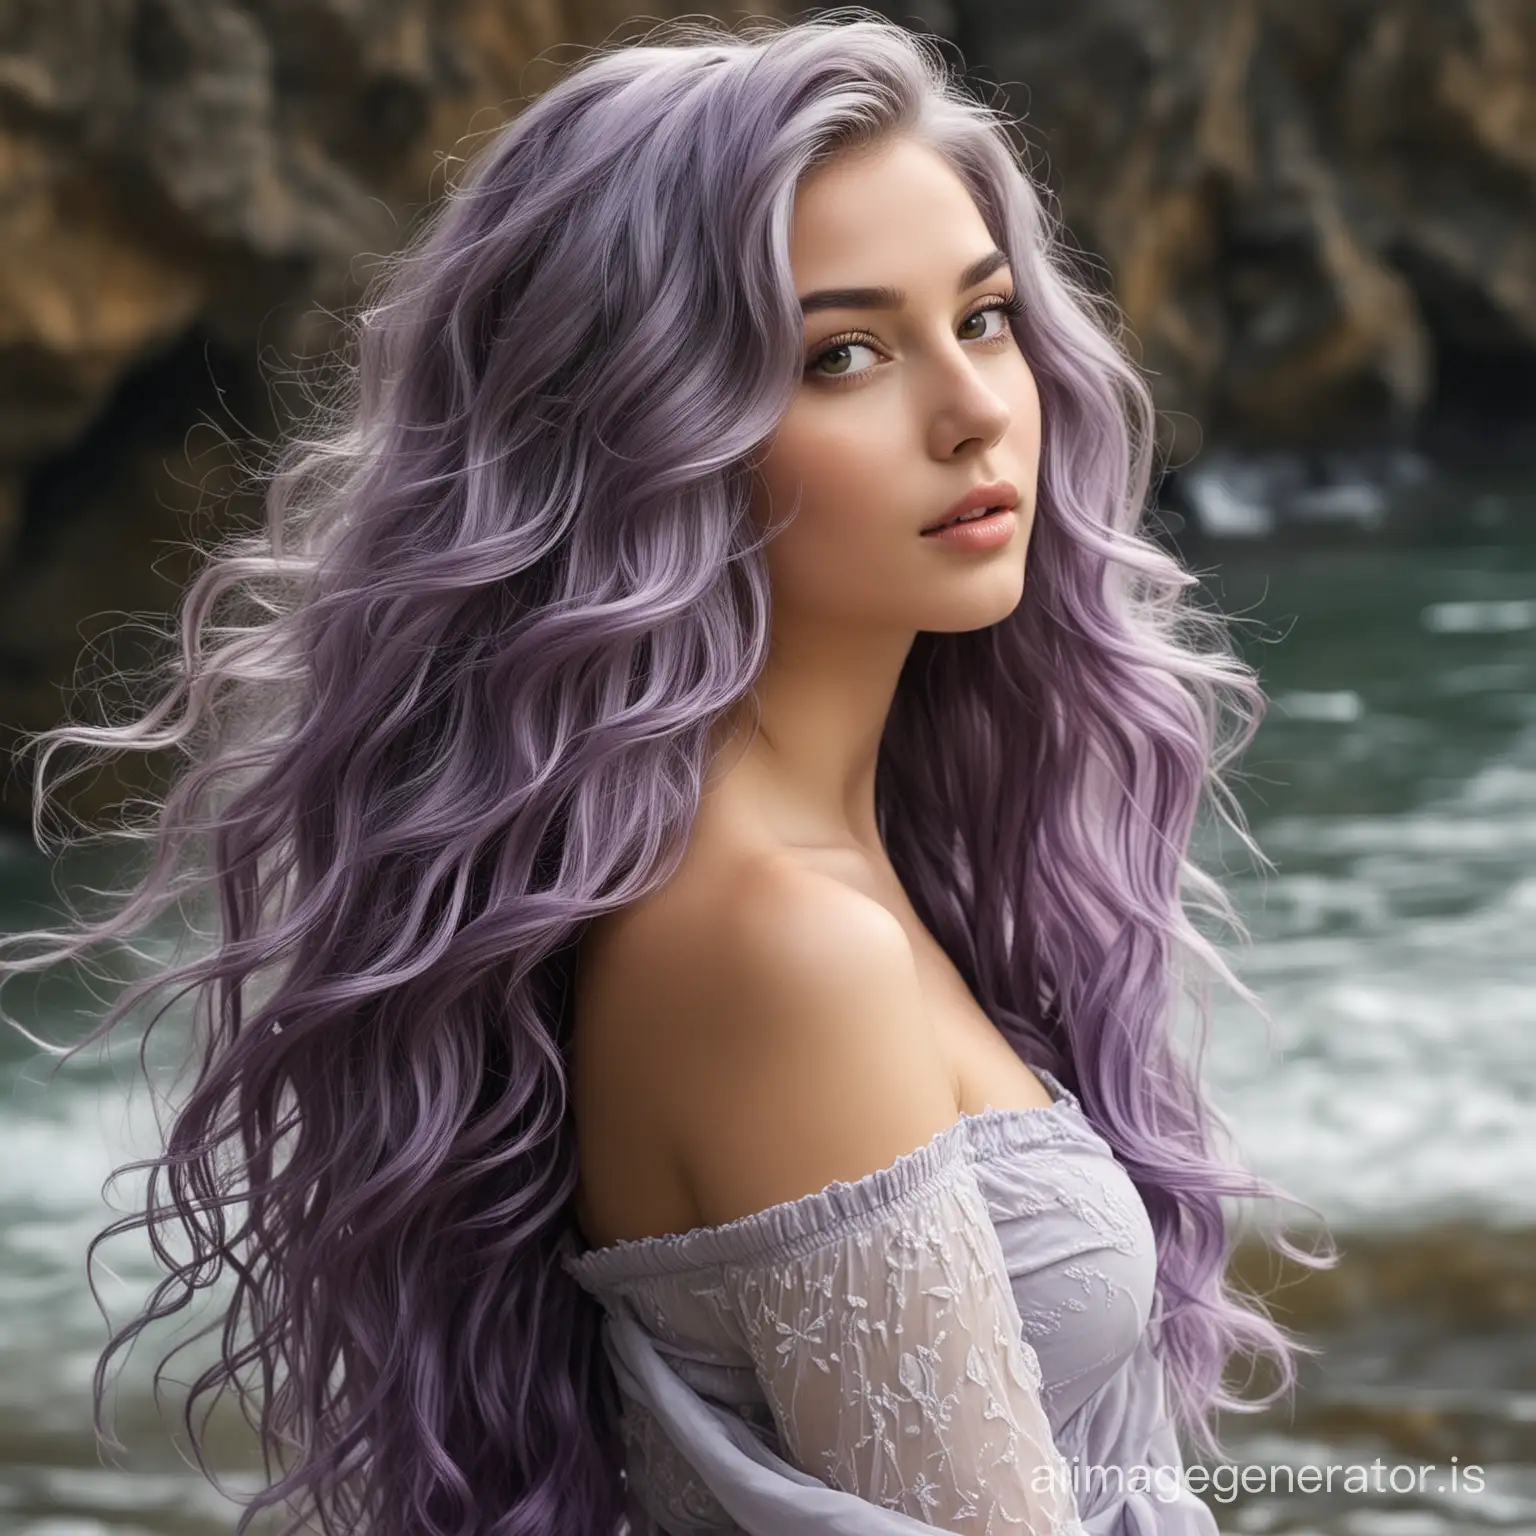 Ethereal-Beauty-Enchanting-Woman-with-Long-PurpleGrey-Wavy-Hair